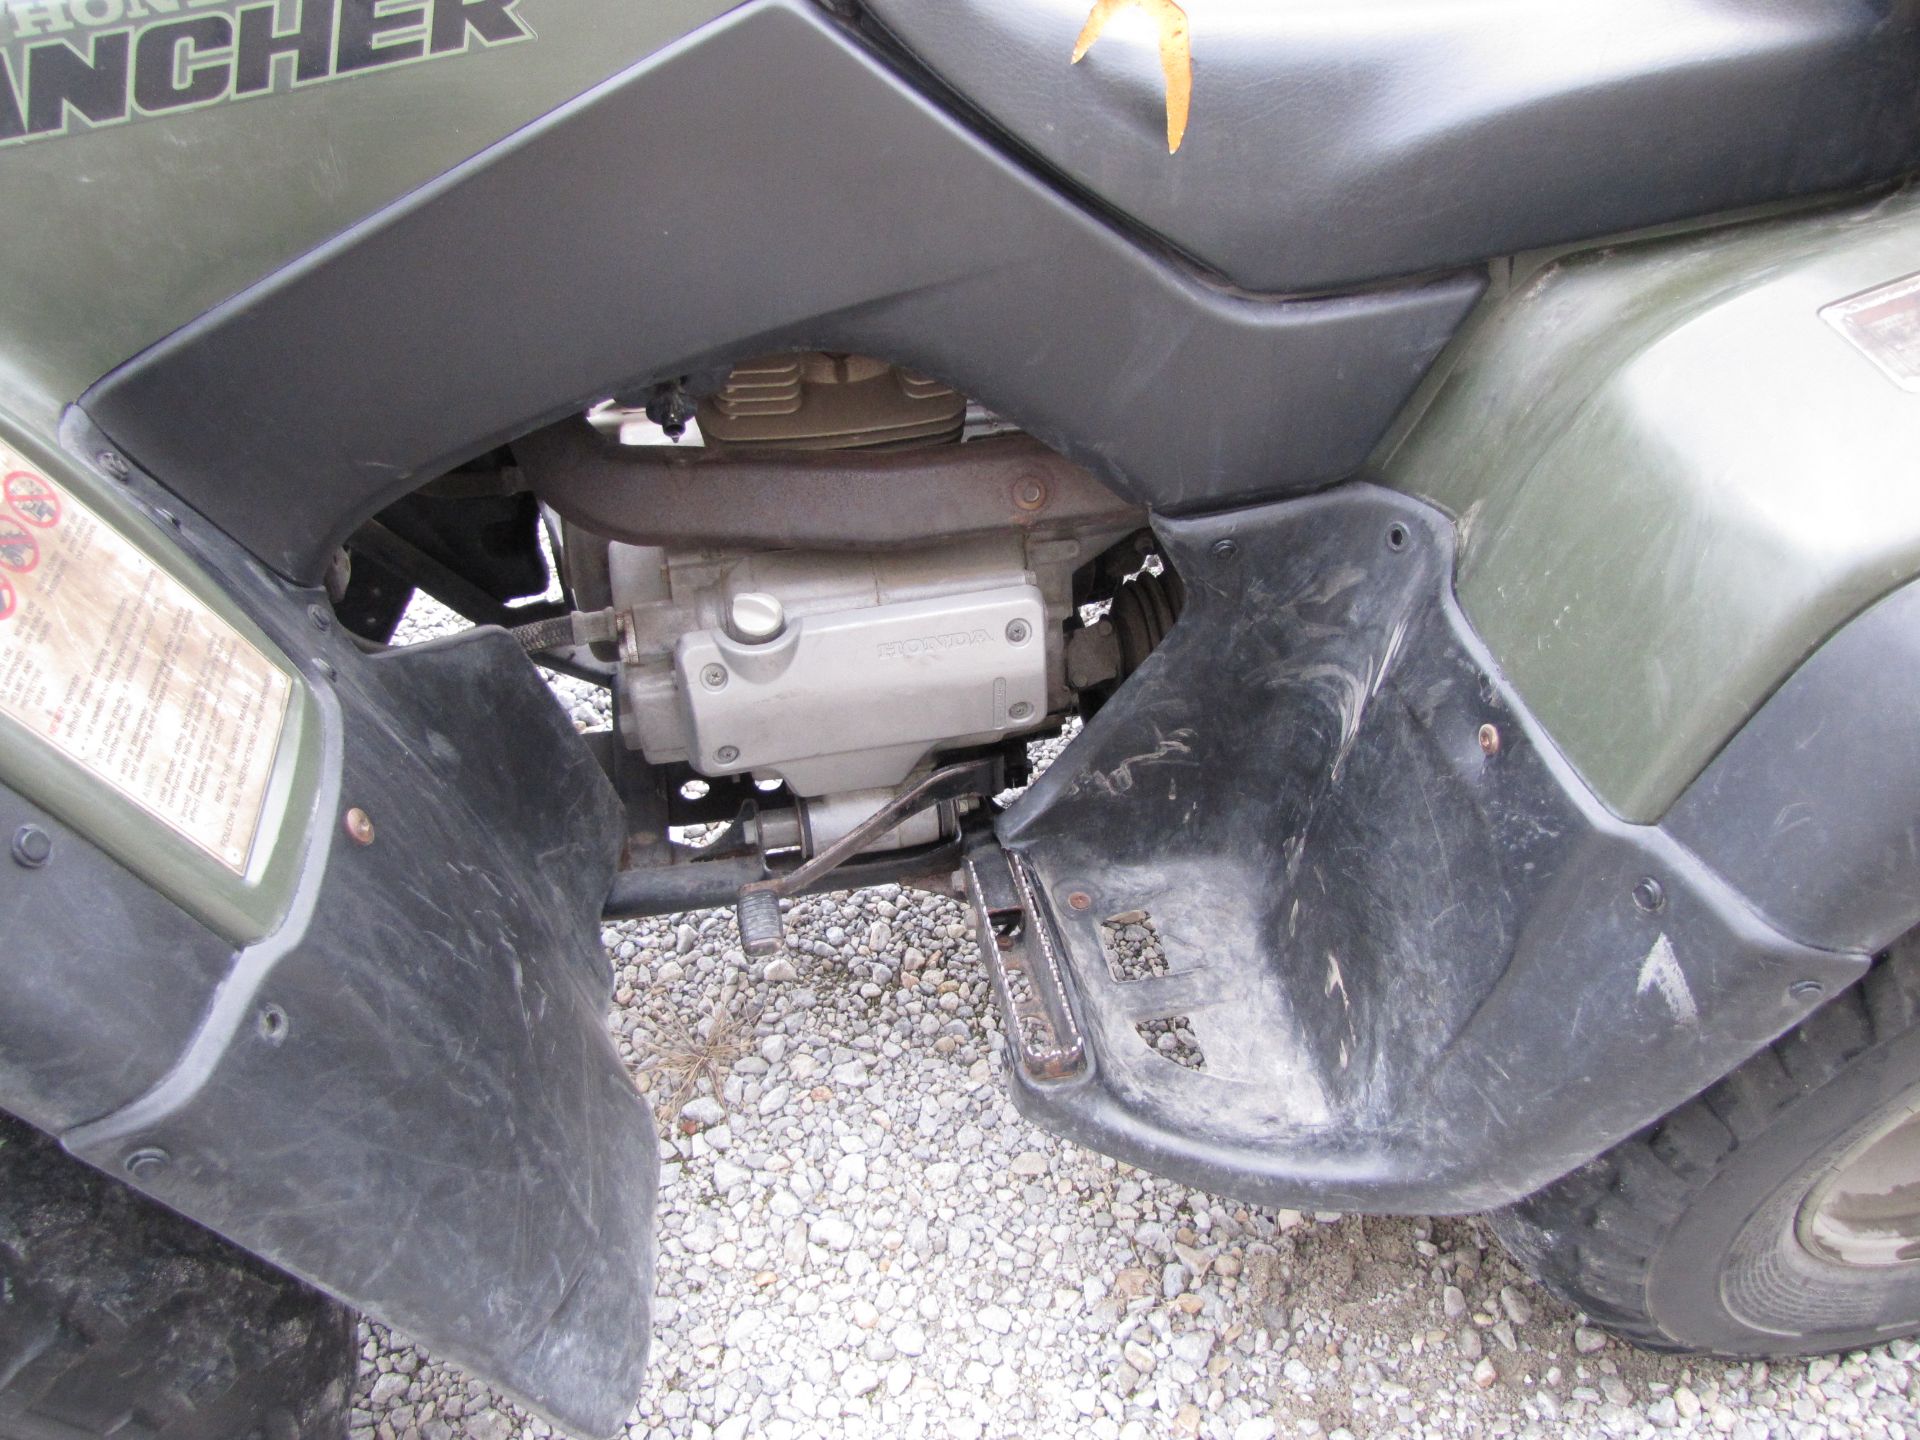 Honda Rancher ATV - Image 23 of 33